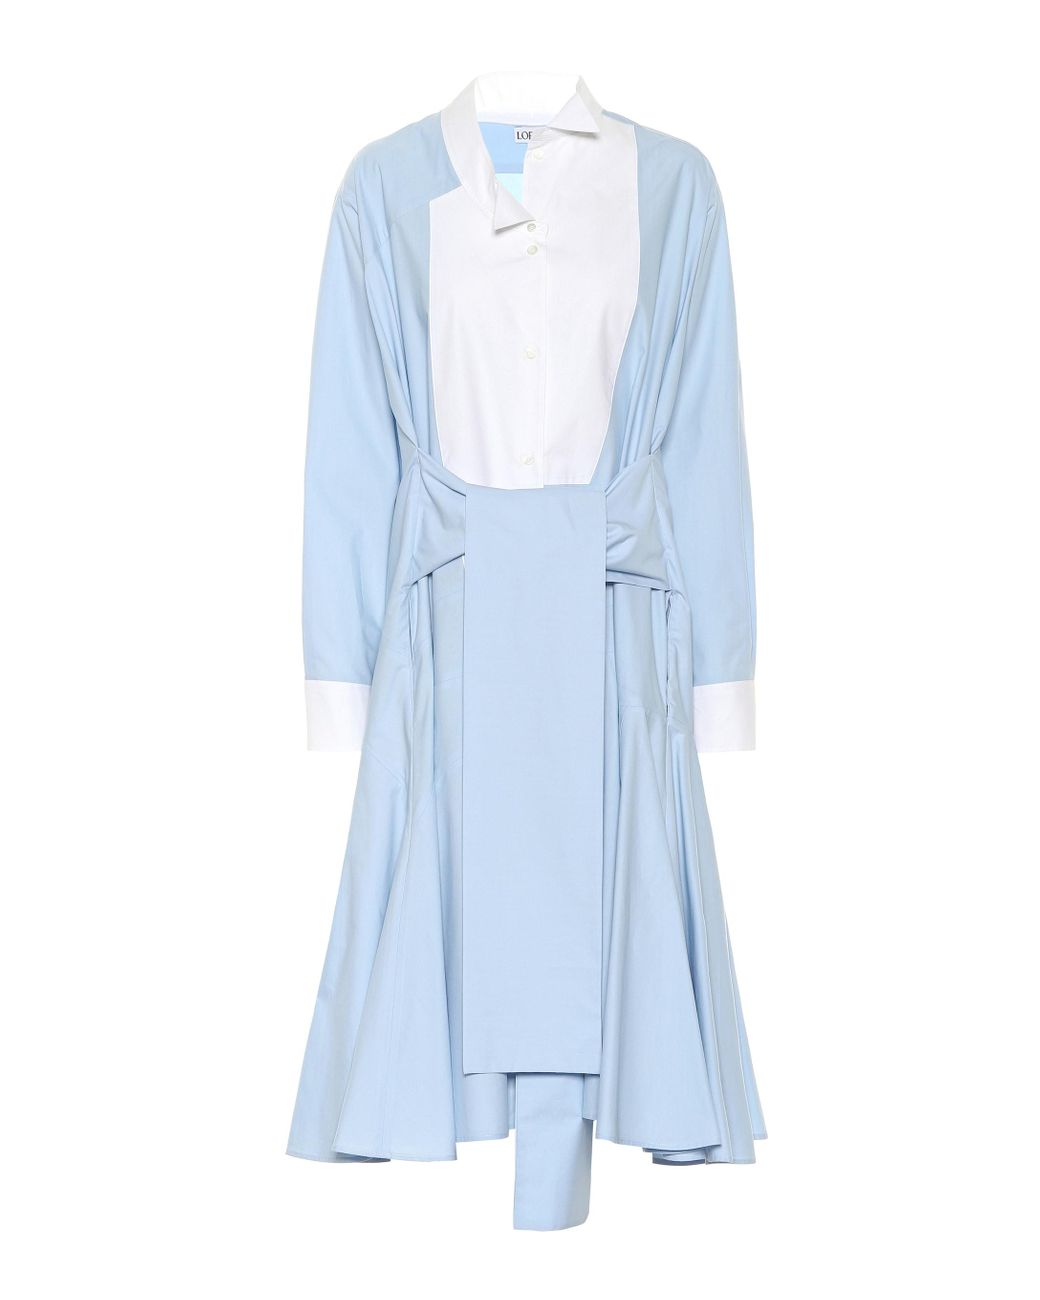 Loewe Asymmetric Cotton Shirt Dress in Blue - Lyst